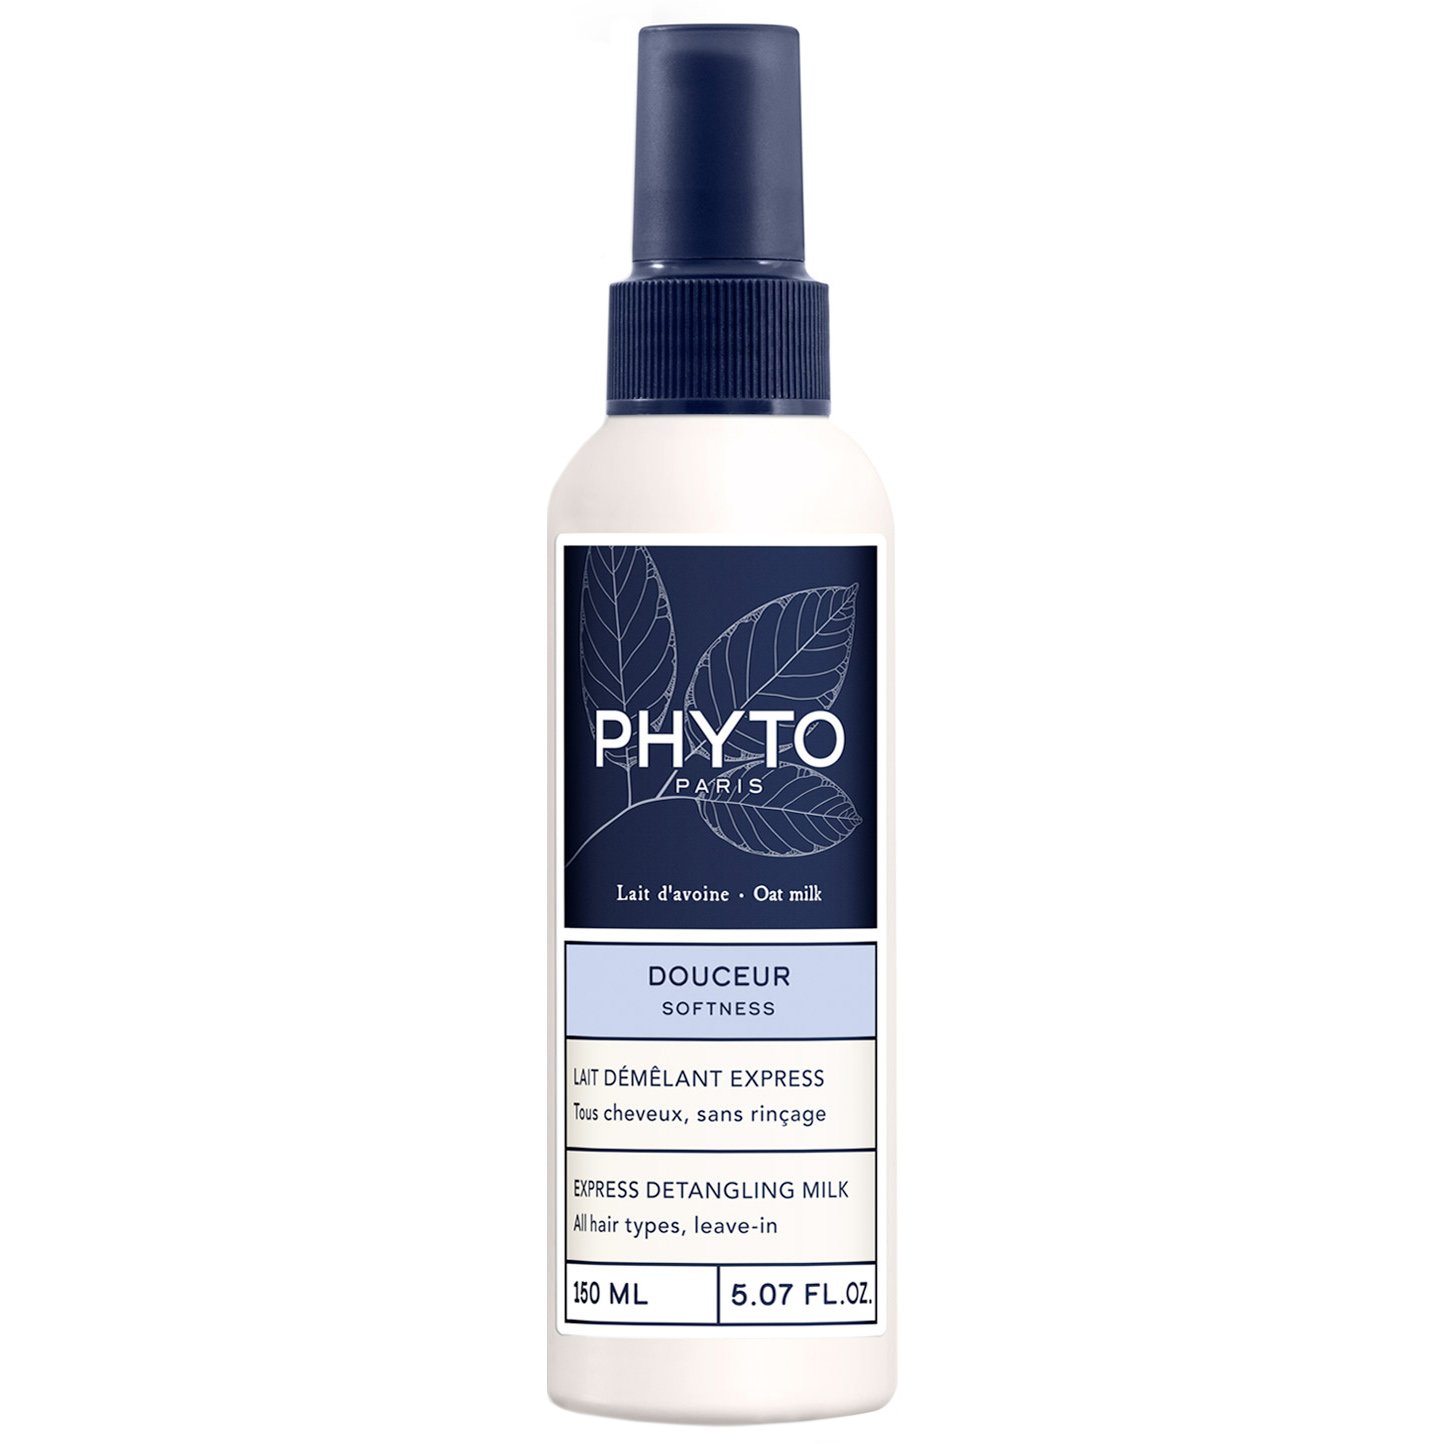 Phyto Paris Phyto Douceur Softness Express Detangling Leave-in Milk for All Hair Types 150ml,Γαλάκτωμα Μαλλιών Leave-in για Λάμψη & Μείωση του Φριζαρίσματος, Κατάλληλο για Όλη την Οικογένεια